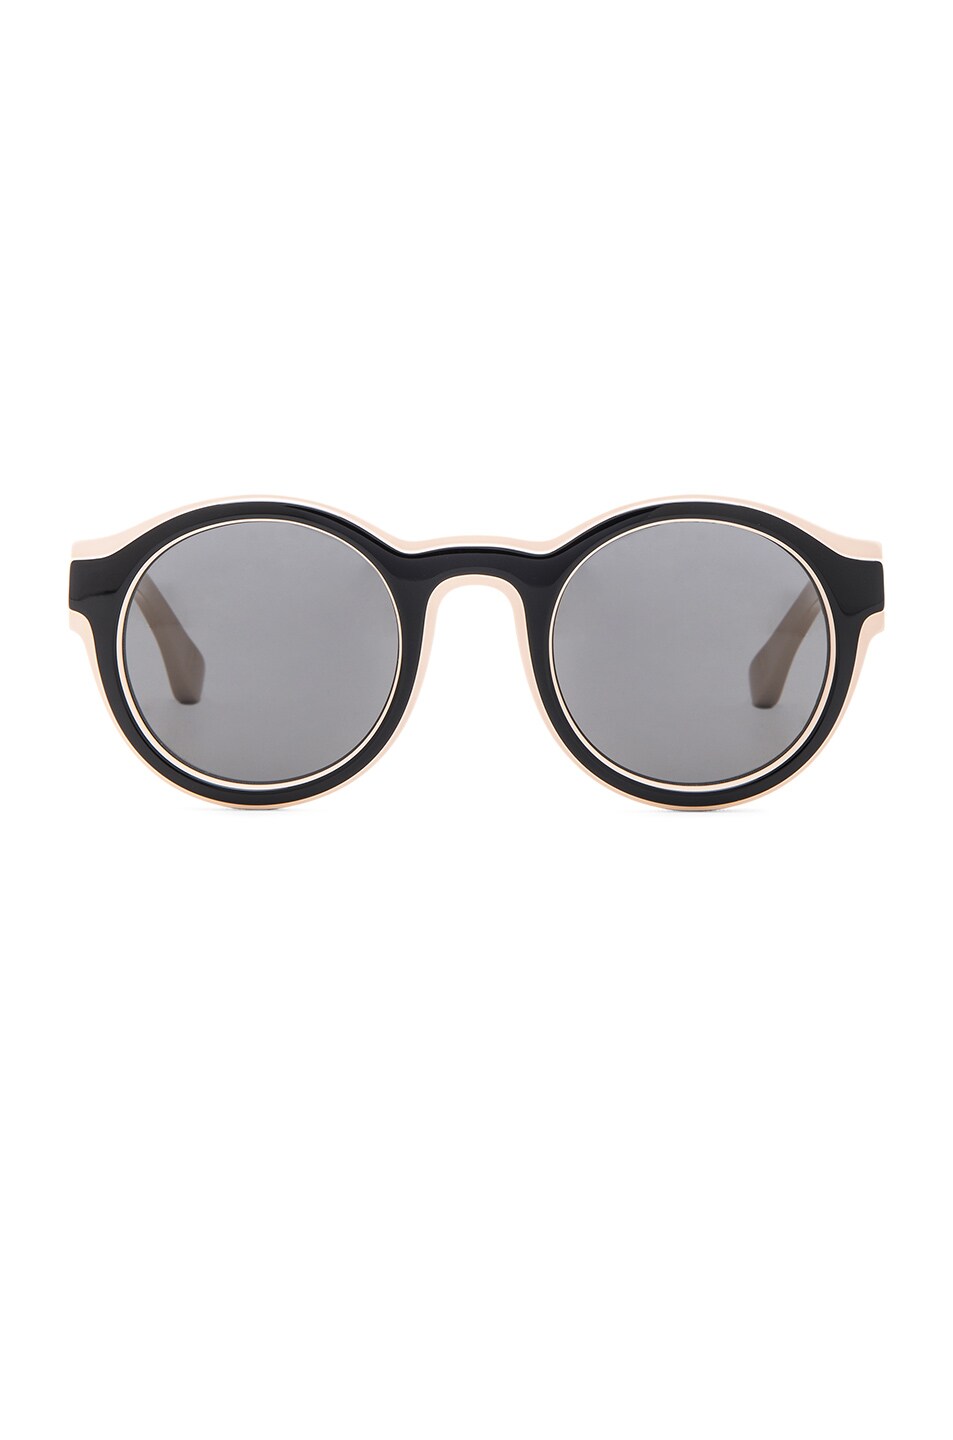 Image 1 of Maison Margiela x Mykita Dual Sunglasses in Nude & Black